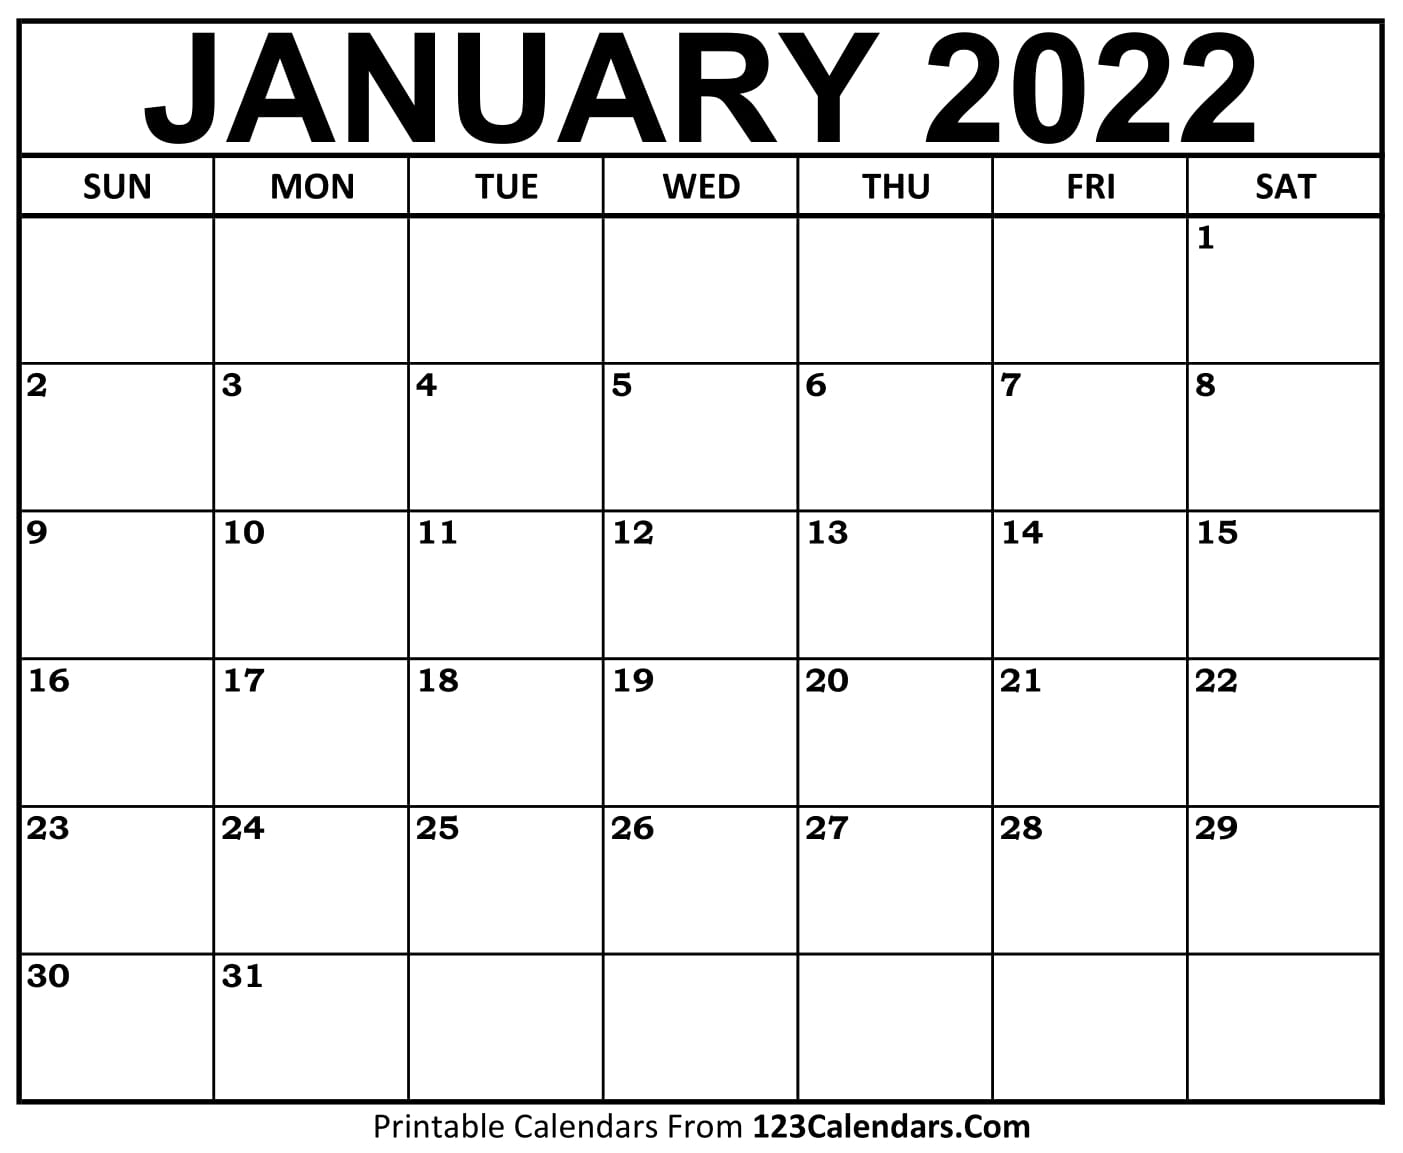 Get Calendar 2022 January Tamil